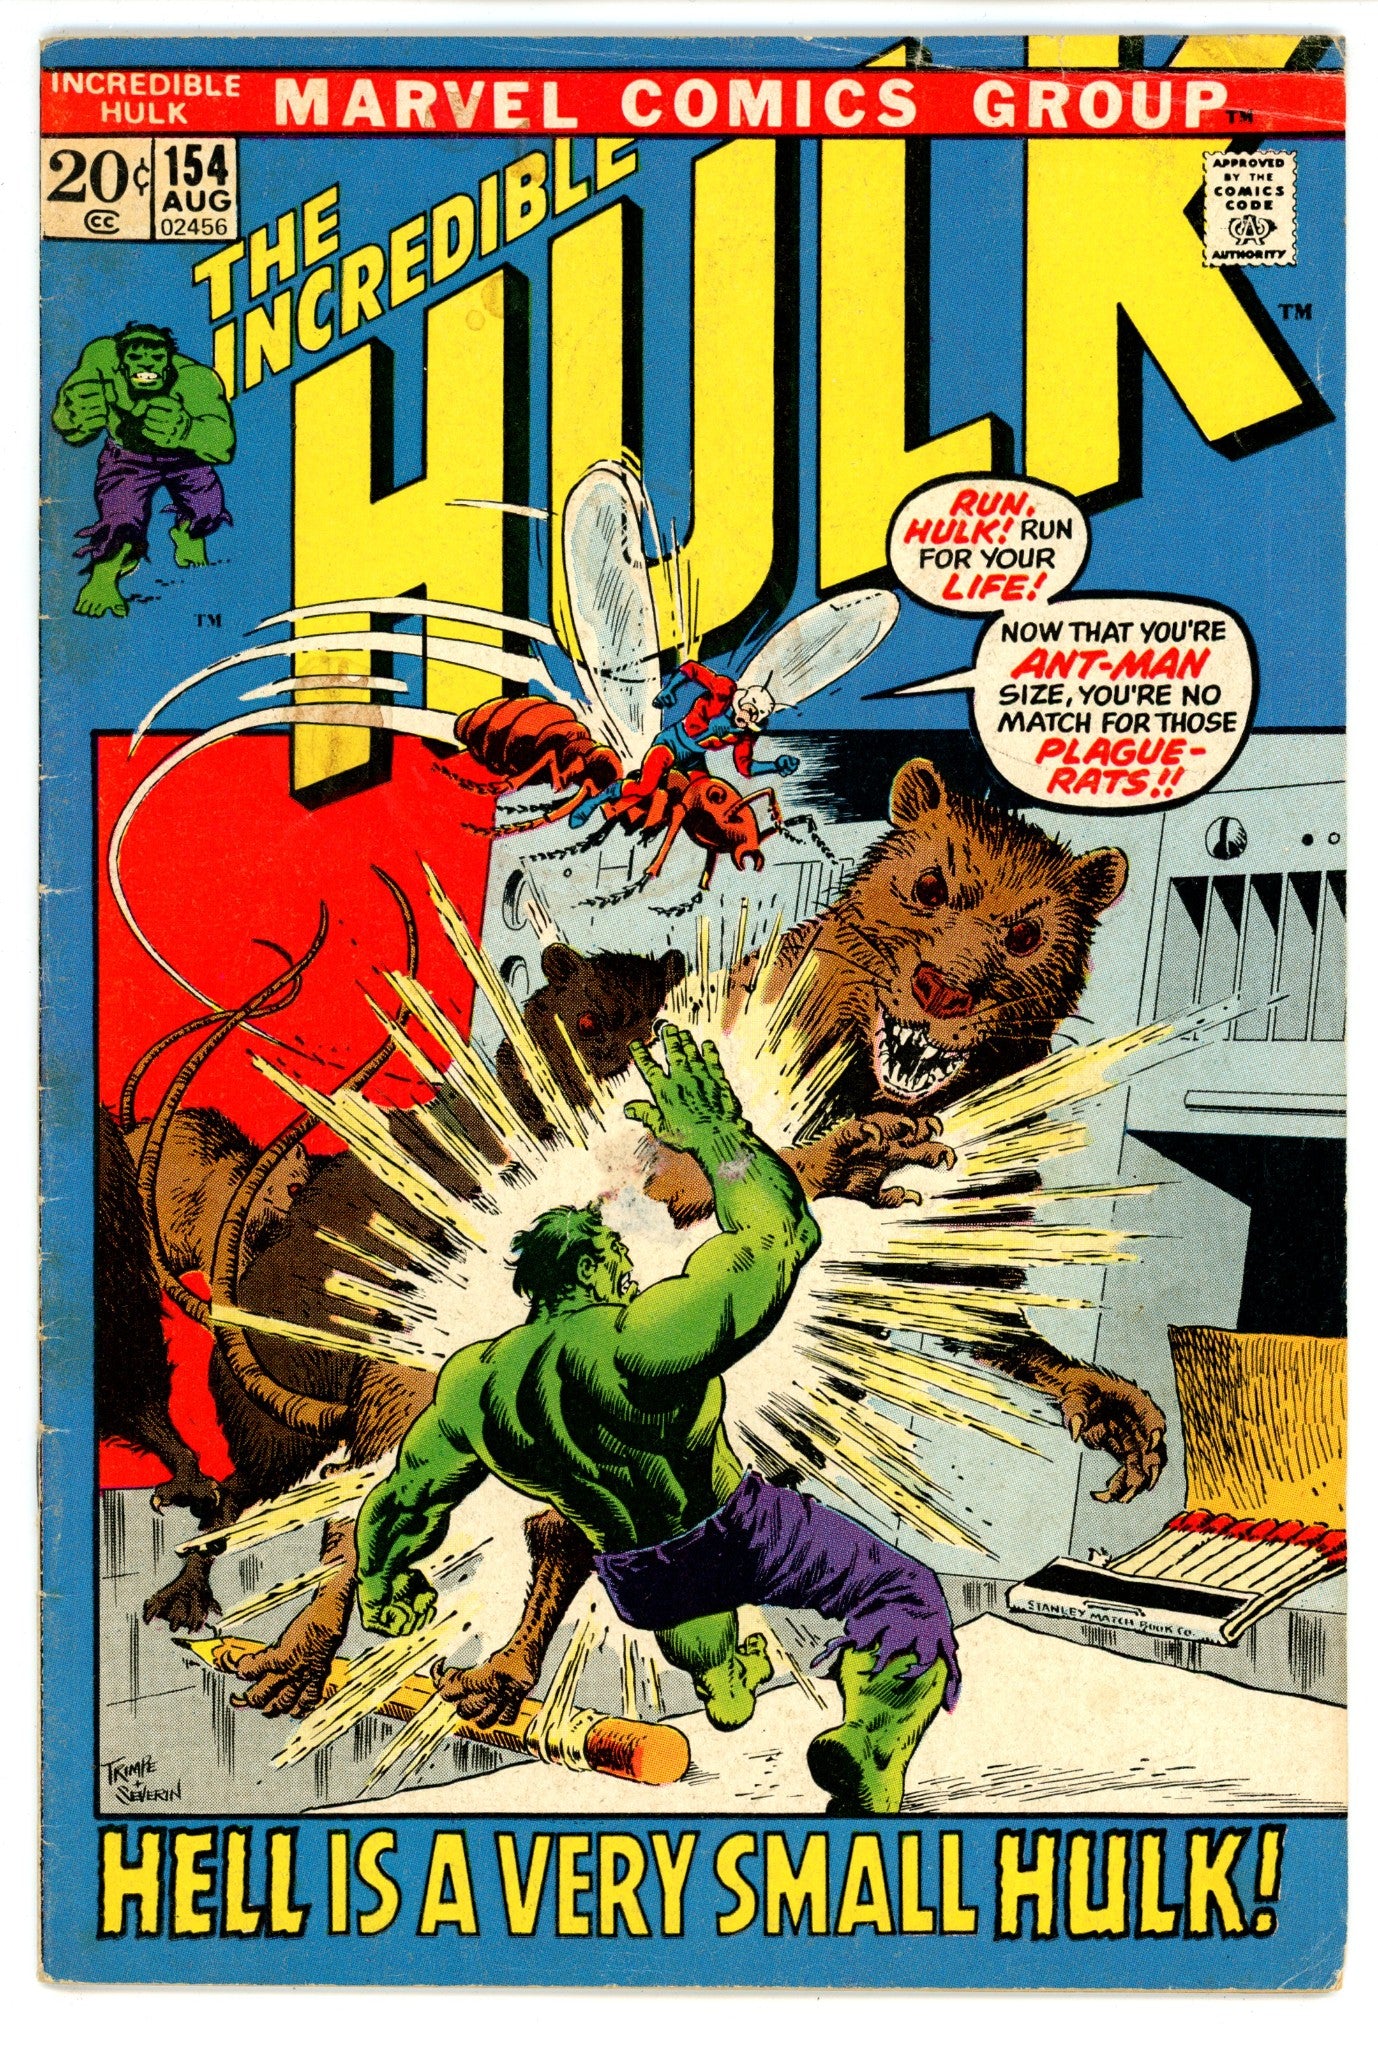 The Incredible Hulk Vol 1 154 VG- (3.5) (1972) 